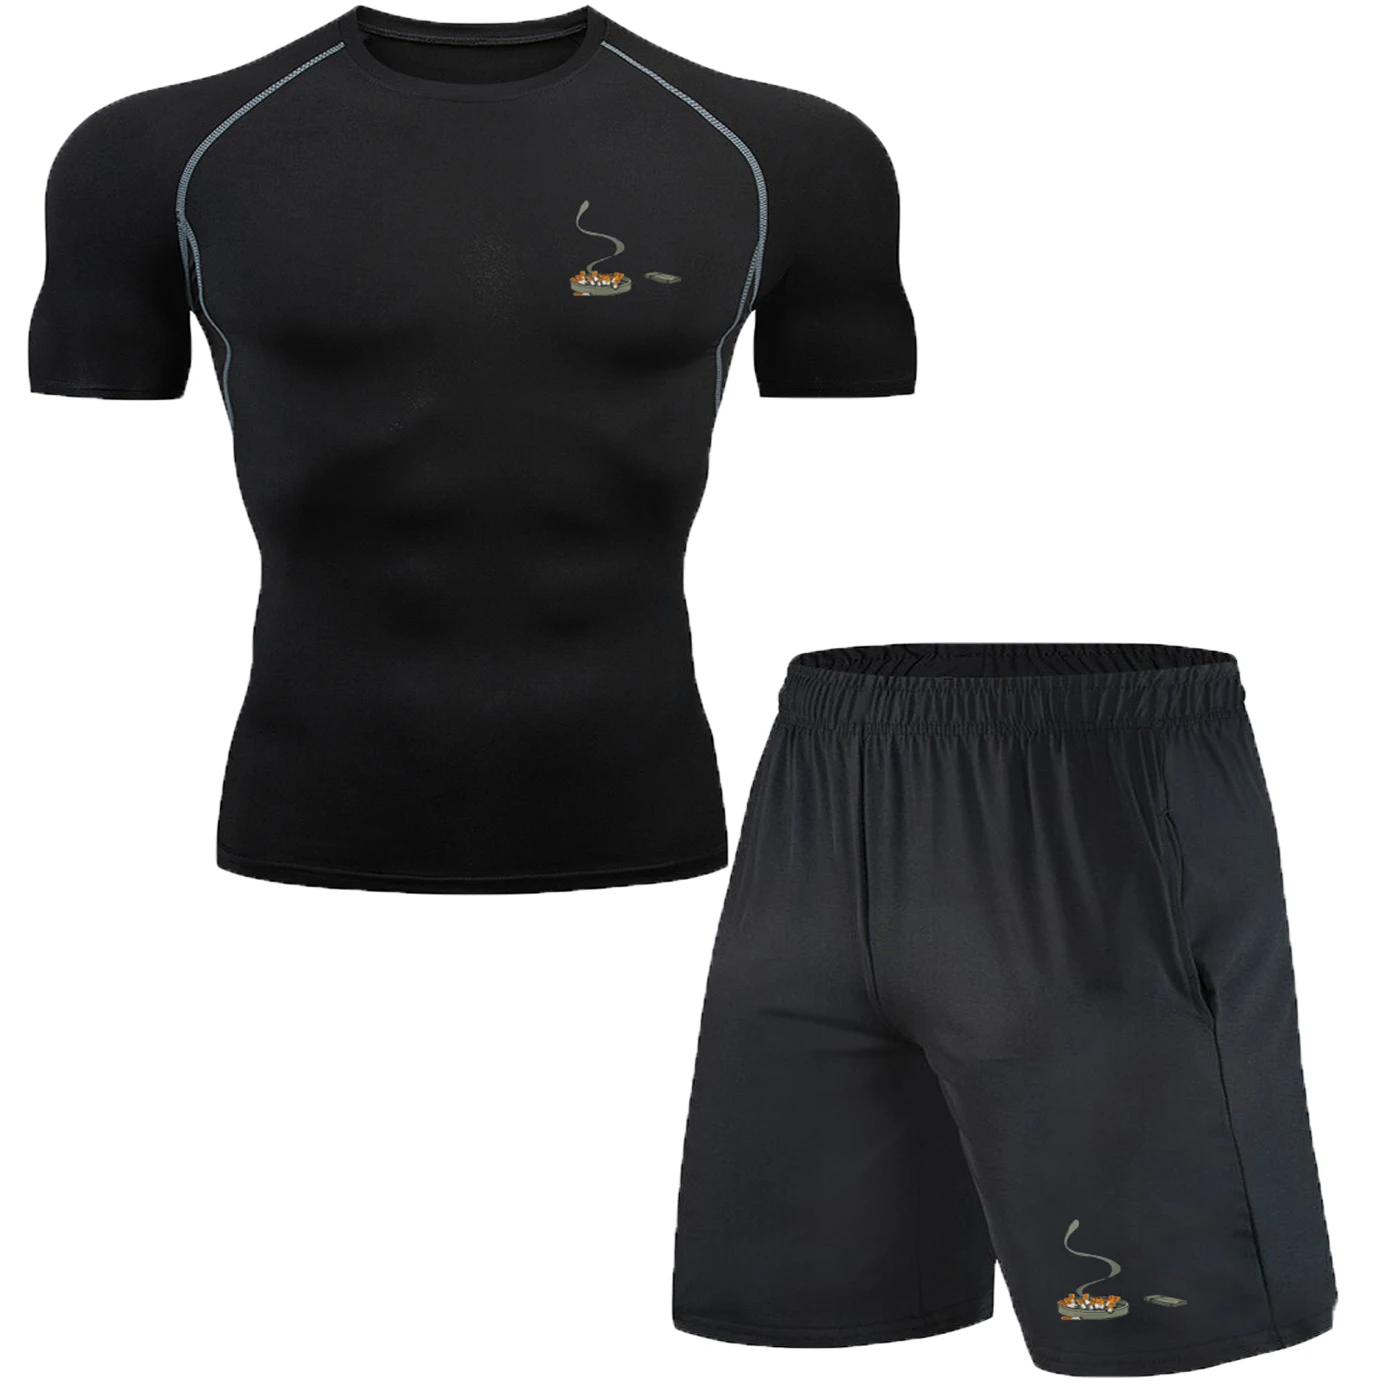 Женское платье для фитнеса compresso dos homens terno esportes de secagem rаpida бега esporte treino fitness corrida |